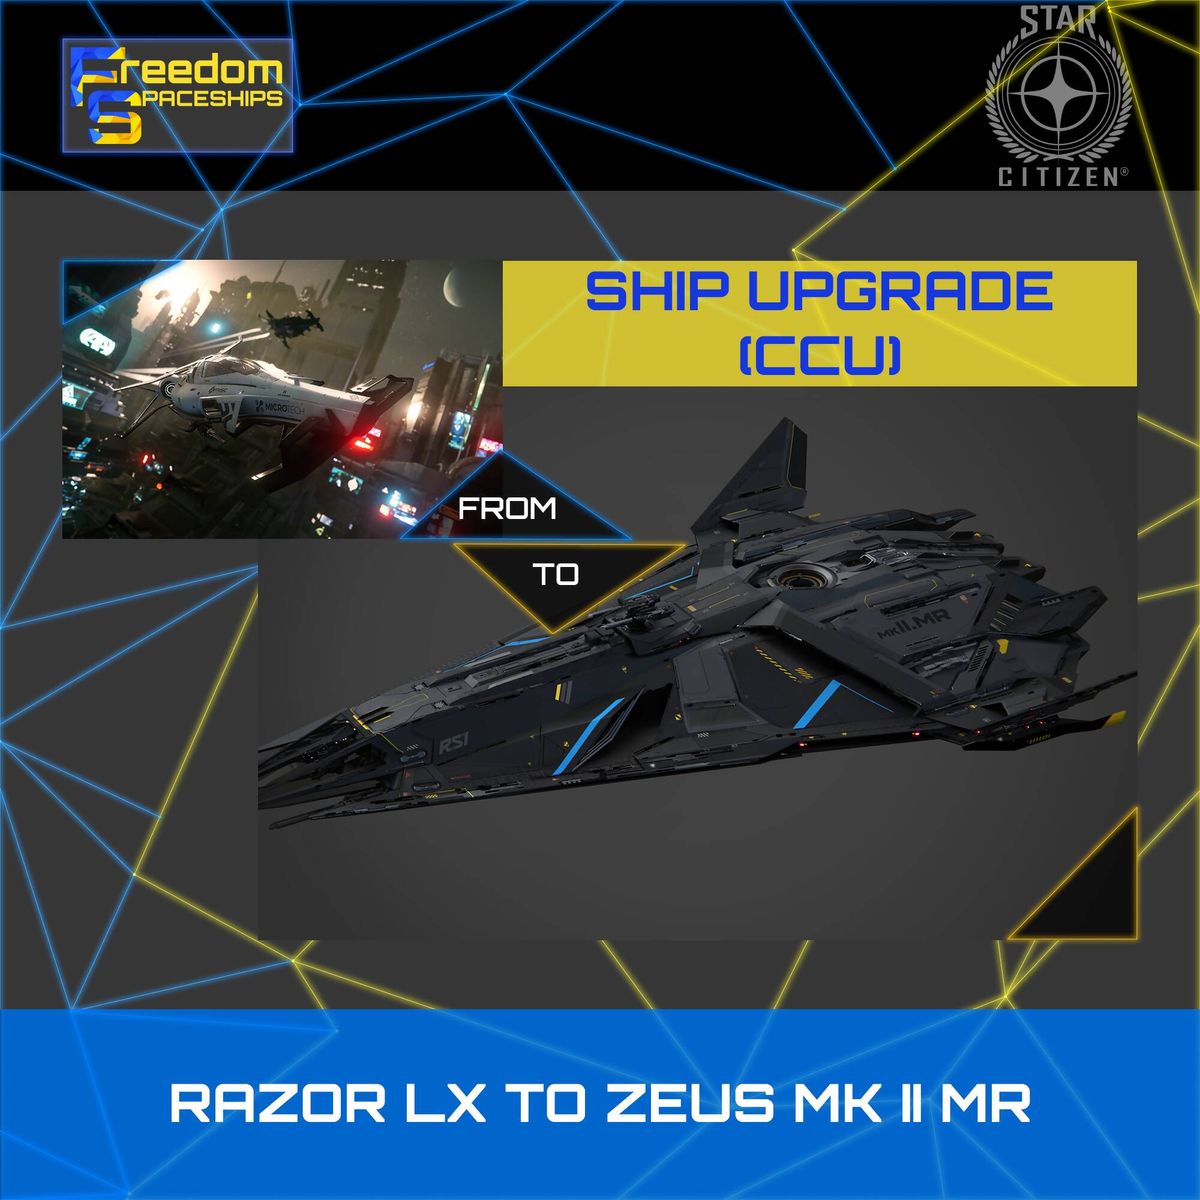 Upgrade - Razor LX to Zeus MK II MR